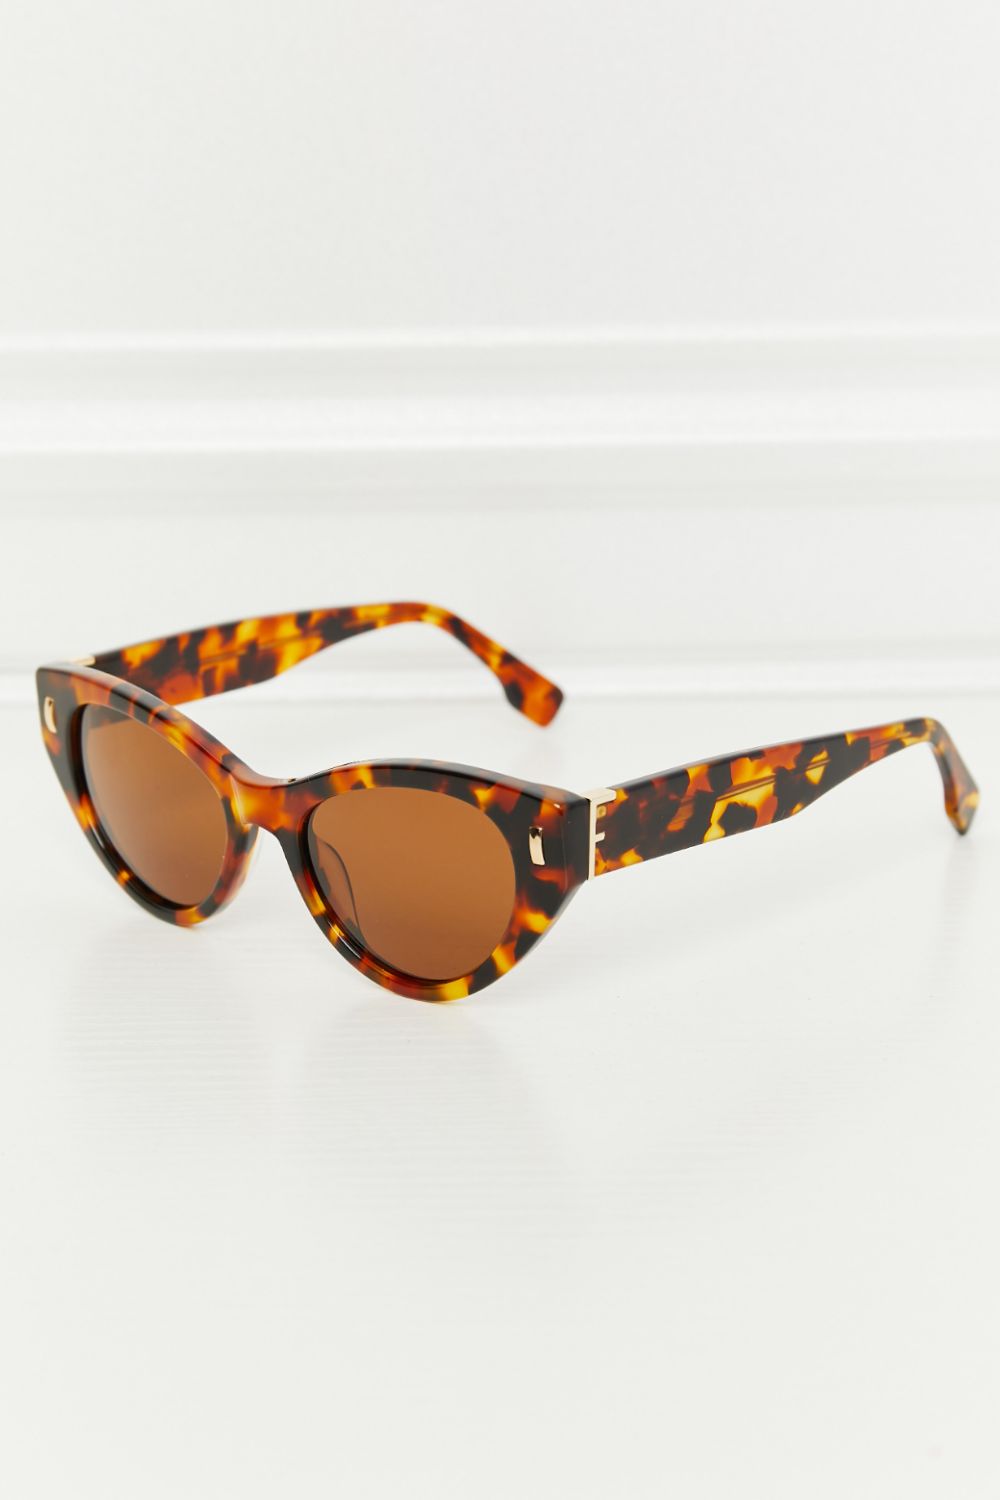 Tortoiseshell Acetate Frame Sunglasses - Shop women apparel, Jewelry, bath & beauty products online - Arwen's Boutique